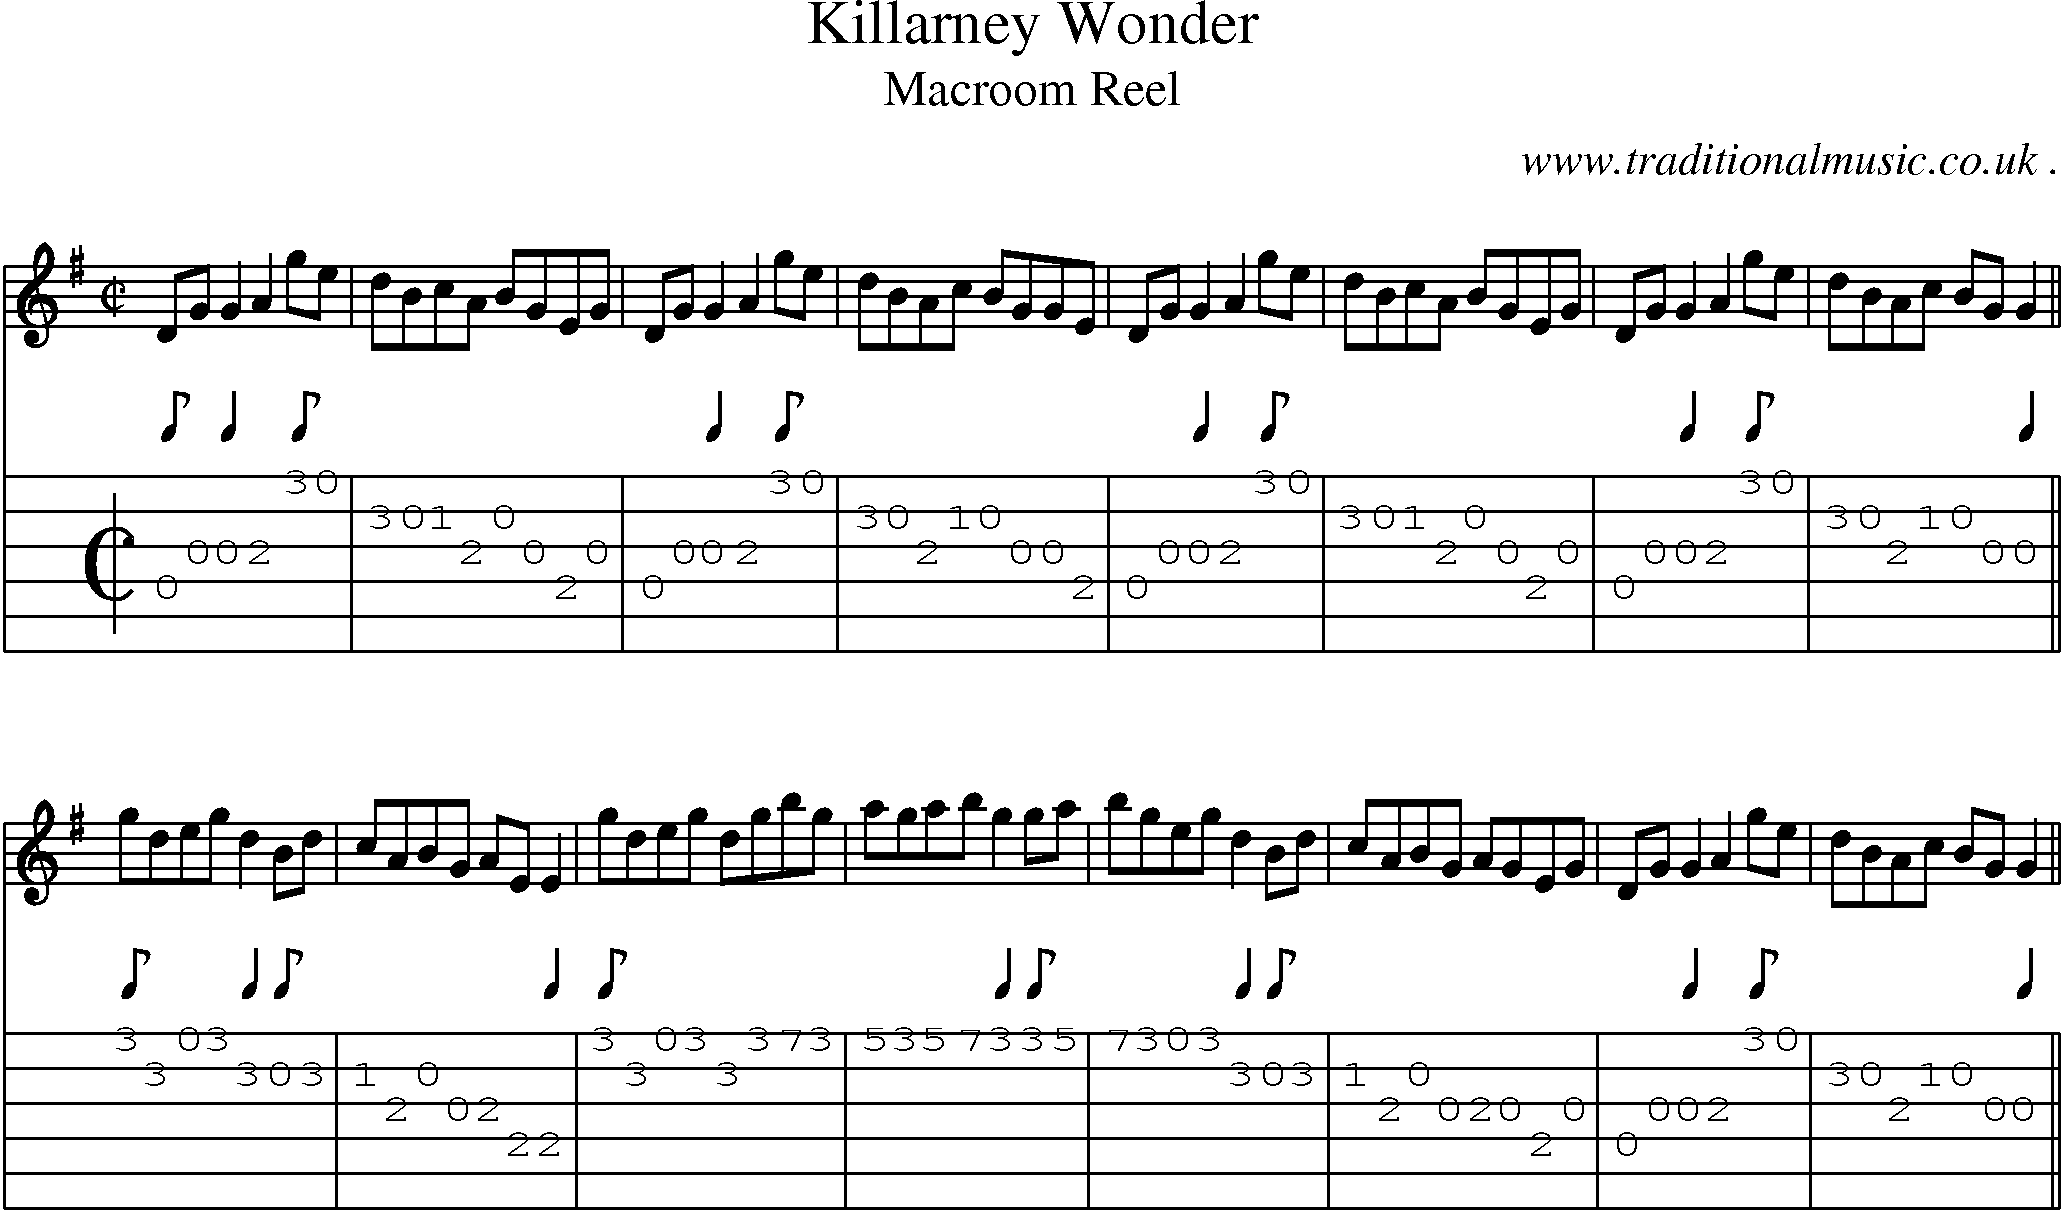 Sheet-Music and Guitar Tabs for Killarney Wonder